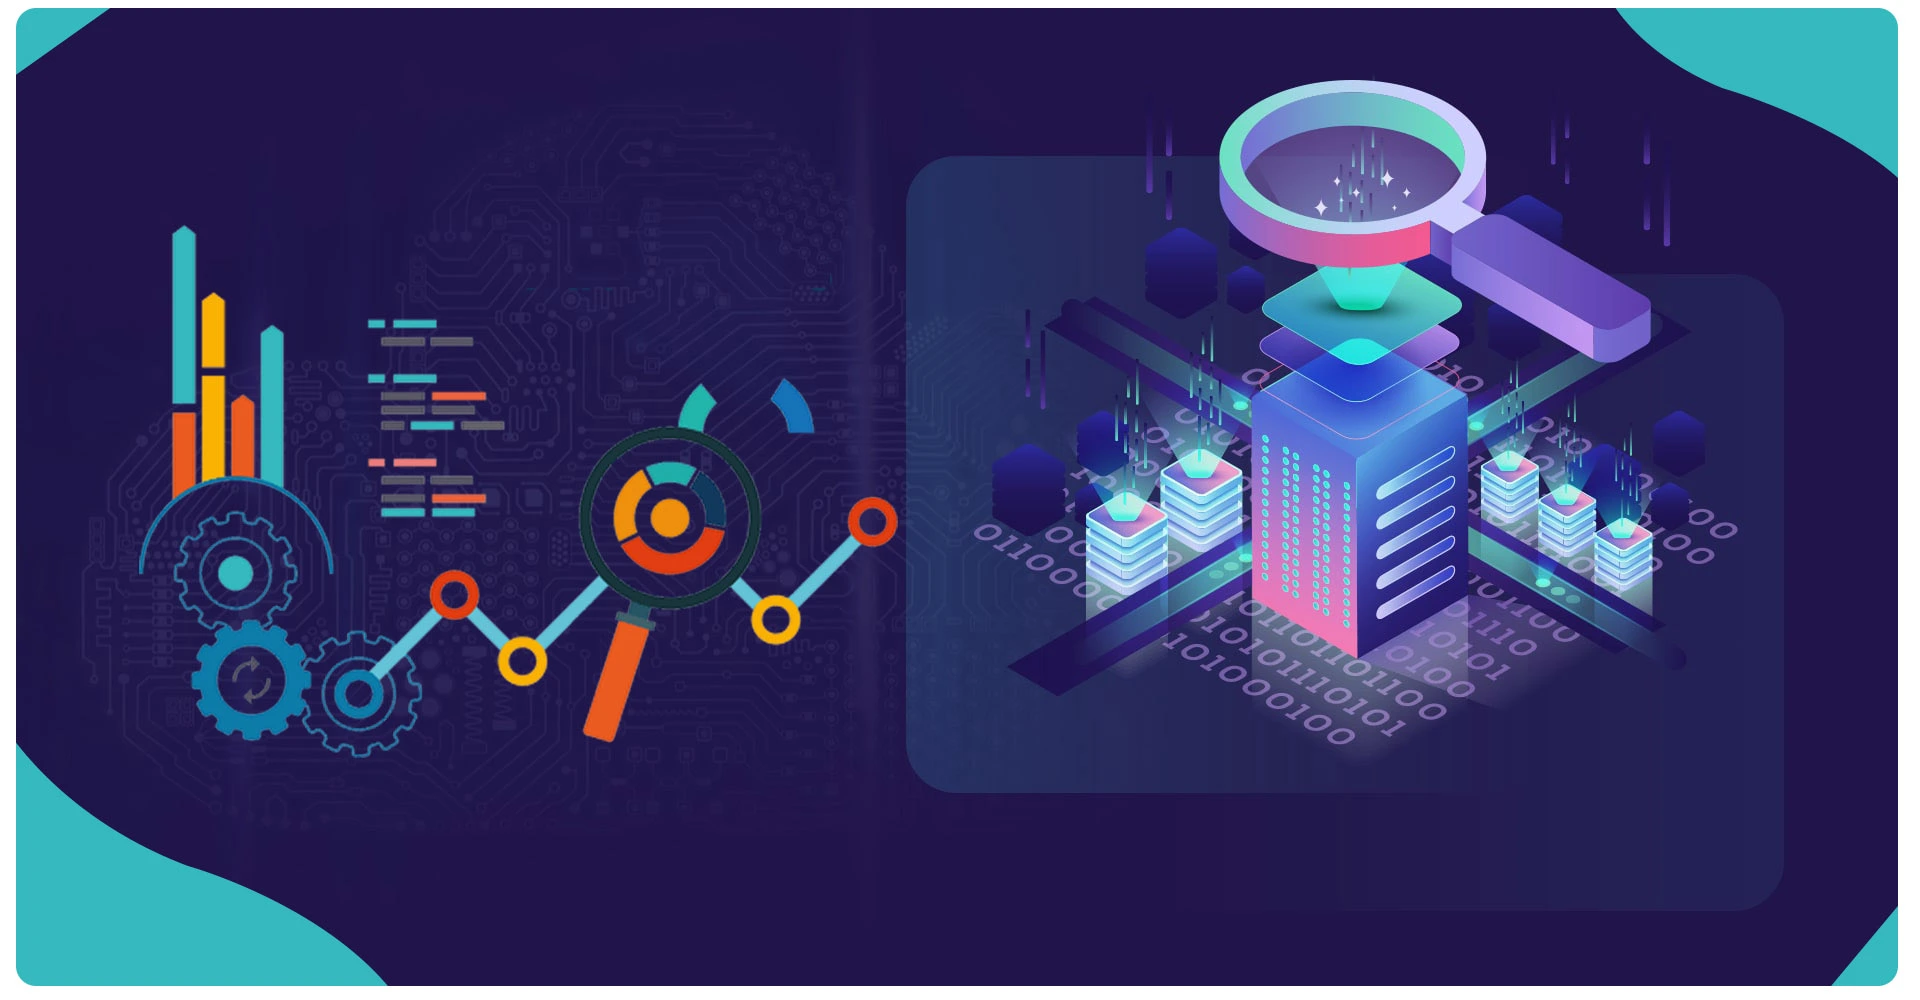 Advanced Analytics | Connect Infosoft Technologies